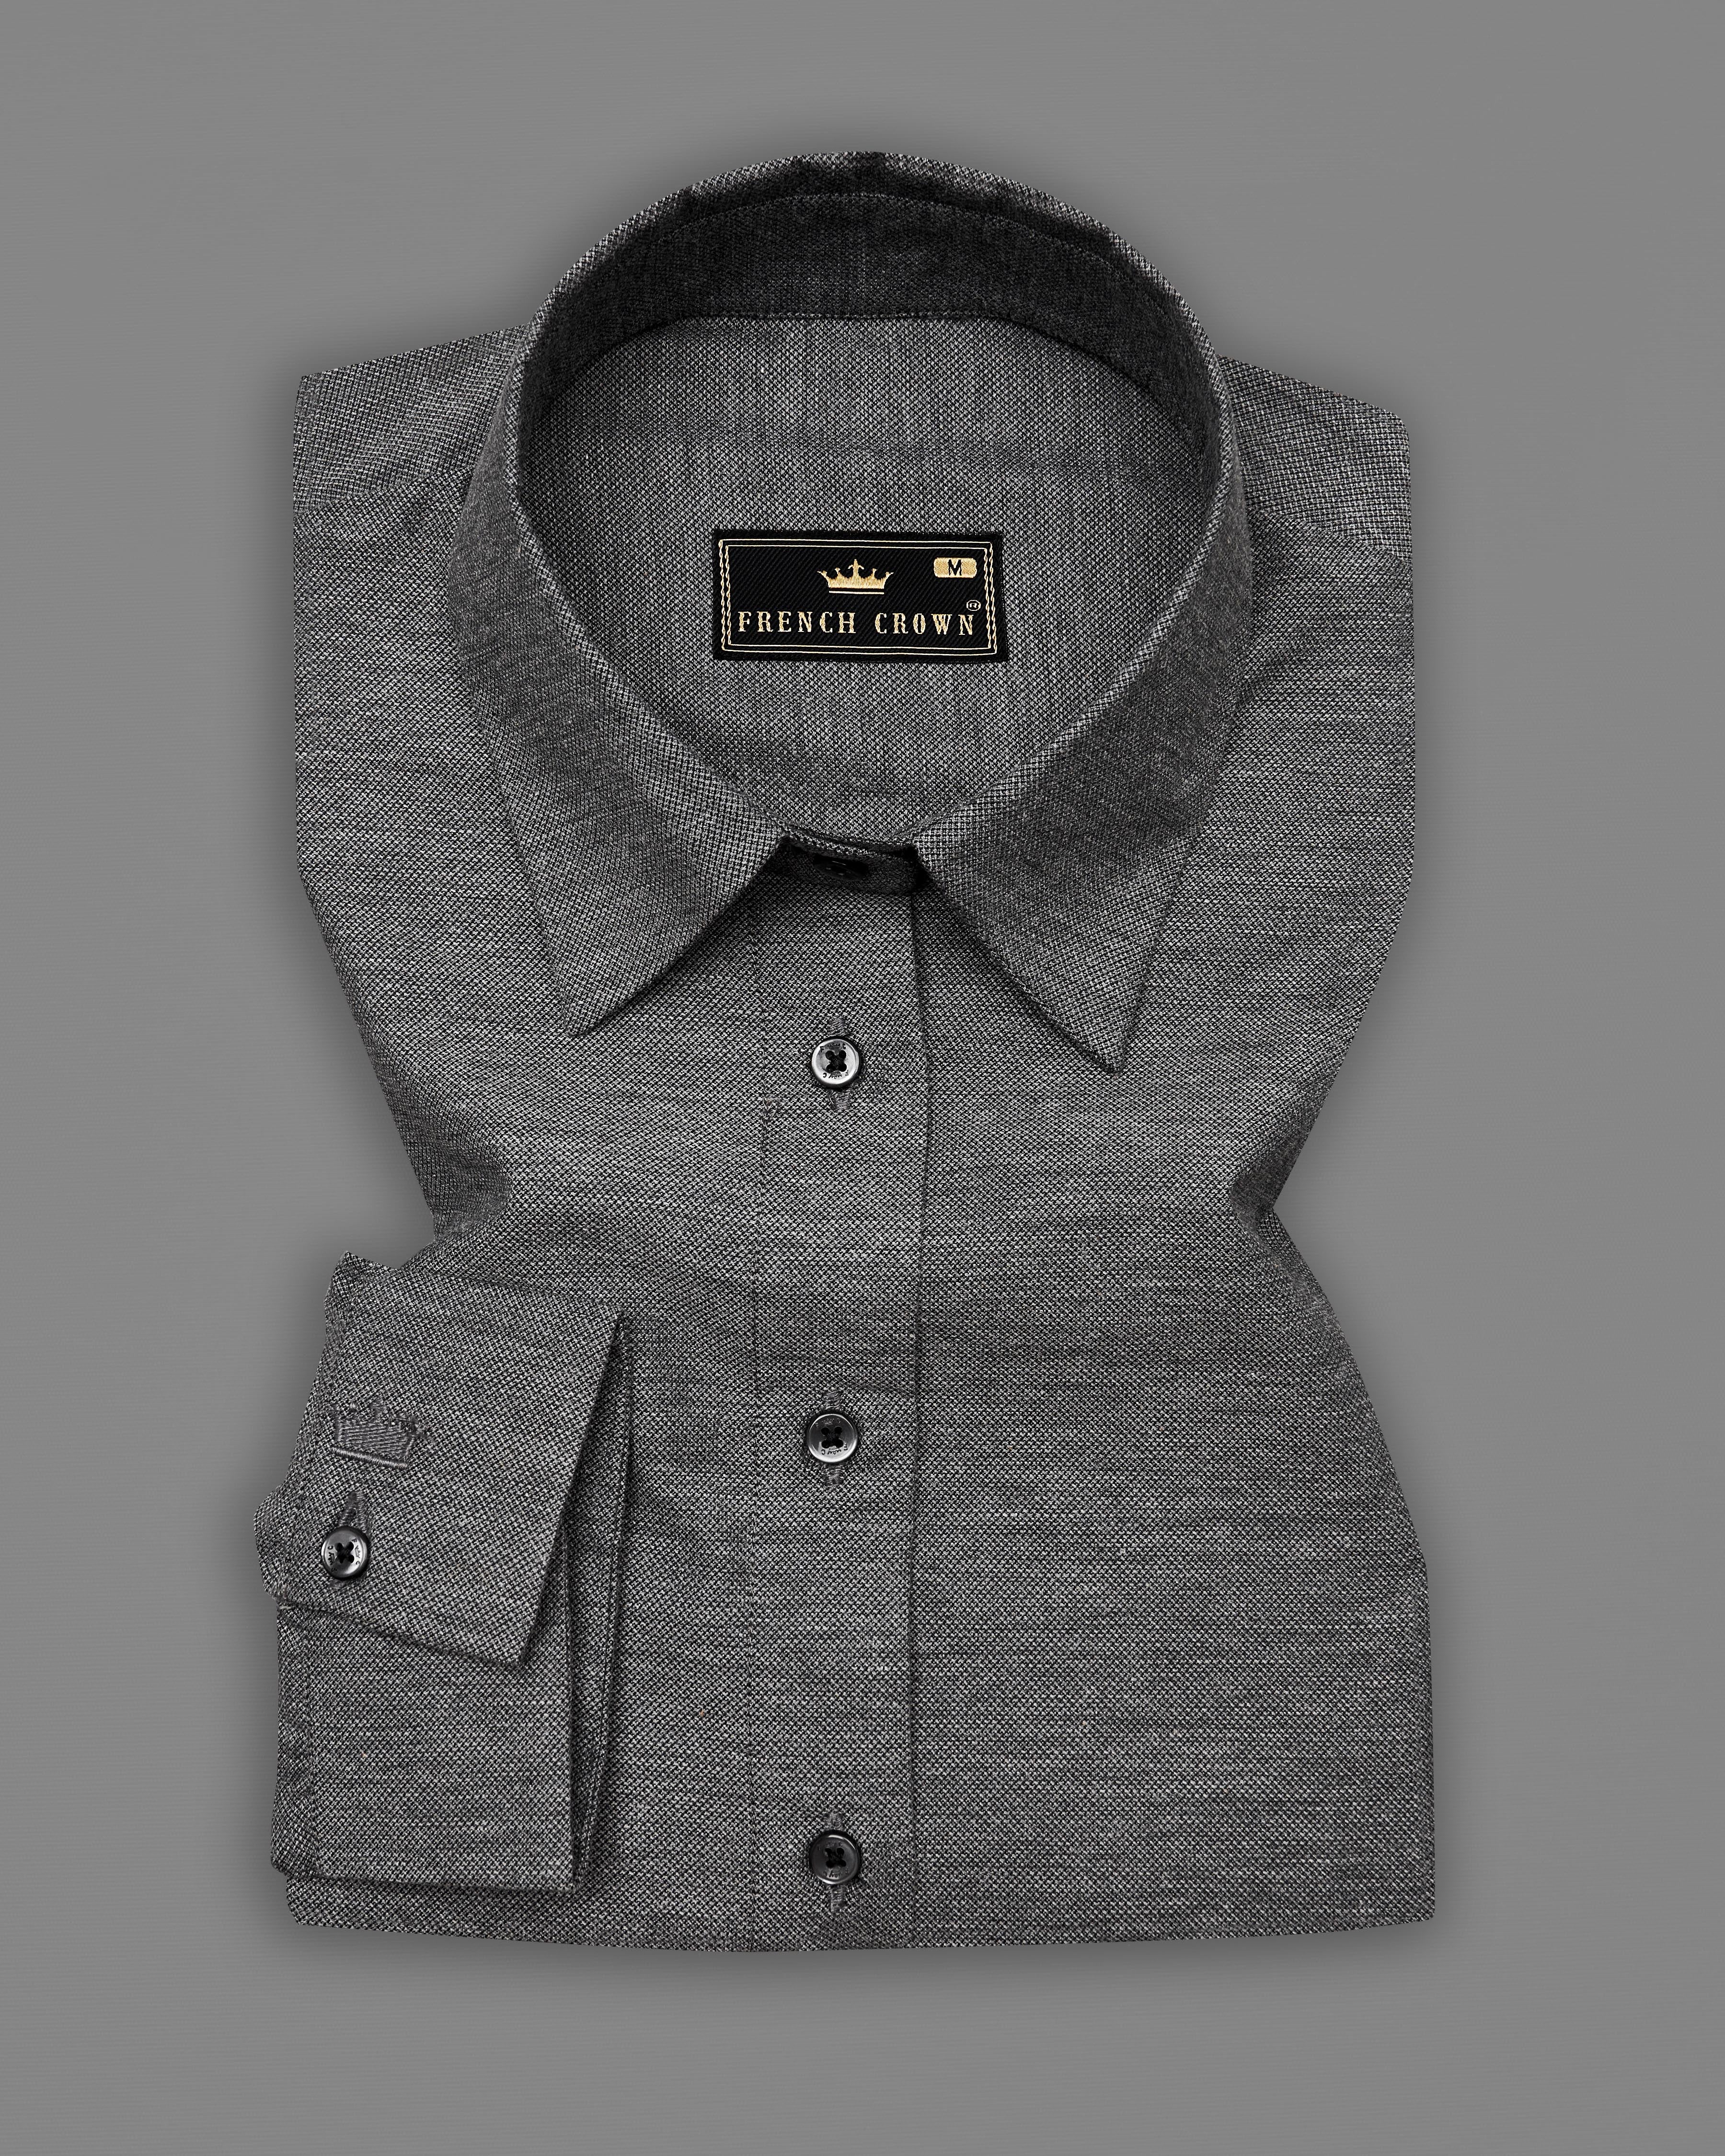 Concord Gray Premium Cotton Shirt WS044-BLK-32, WS044-BLK-34, WS044-BLK-36, WS044-BLK-38, WS044-BLK-40, WS044-BLK-42